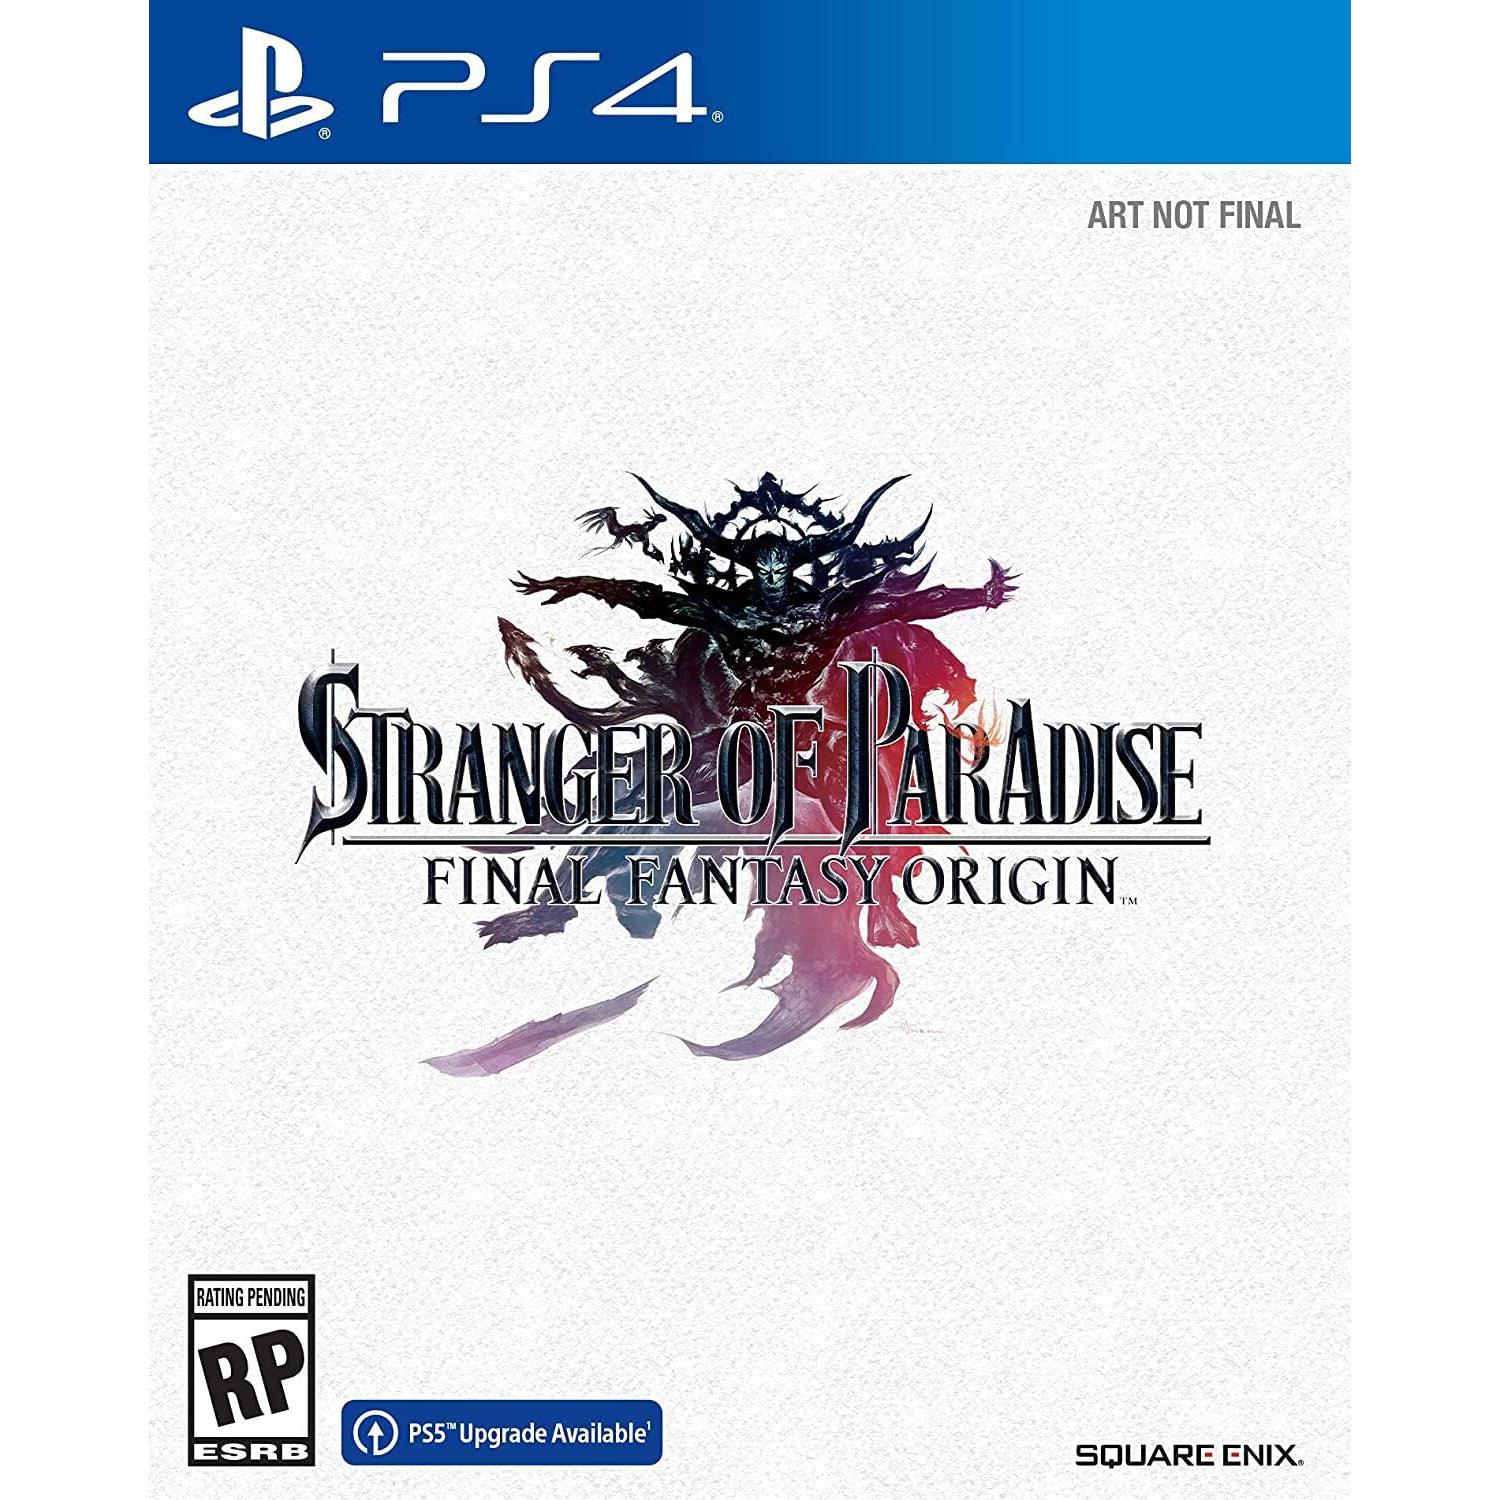 Stranger of Paradise Final Fantasy Origin PS4 or Xbox for $19.99 Shipped